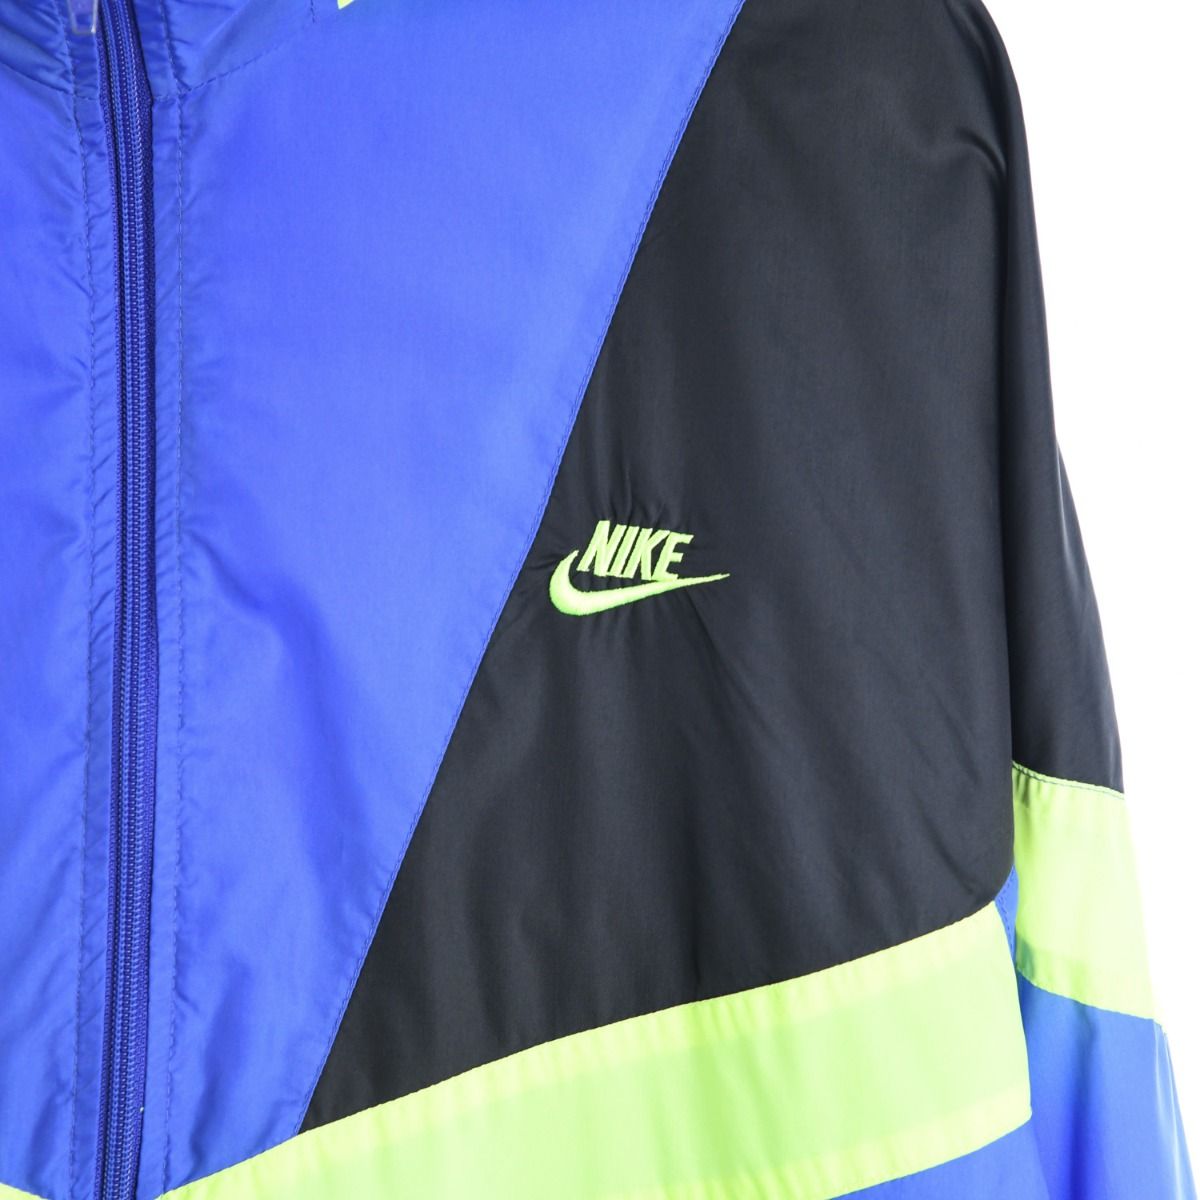 Nike Early 1990s Blue Shell Jacket